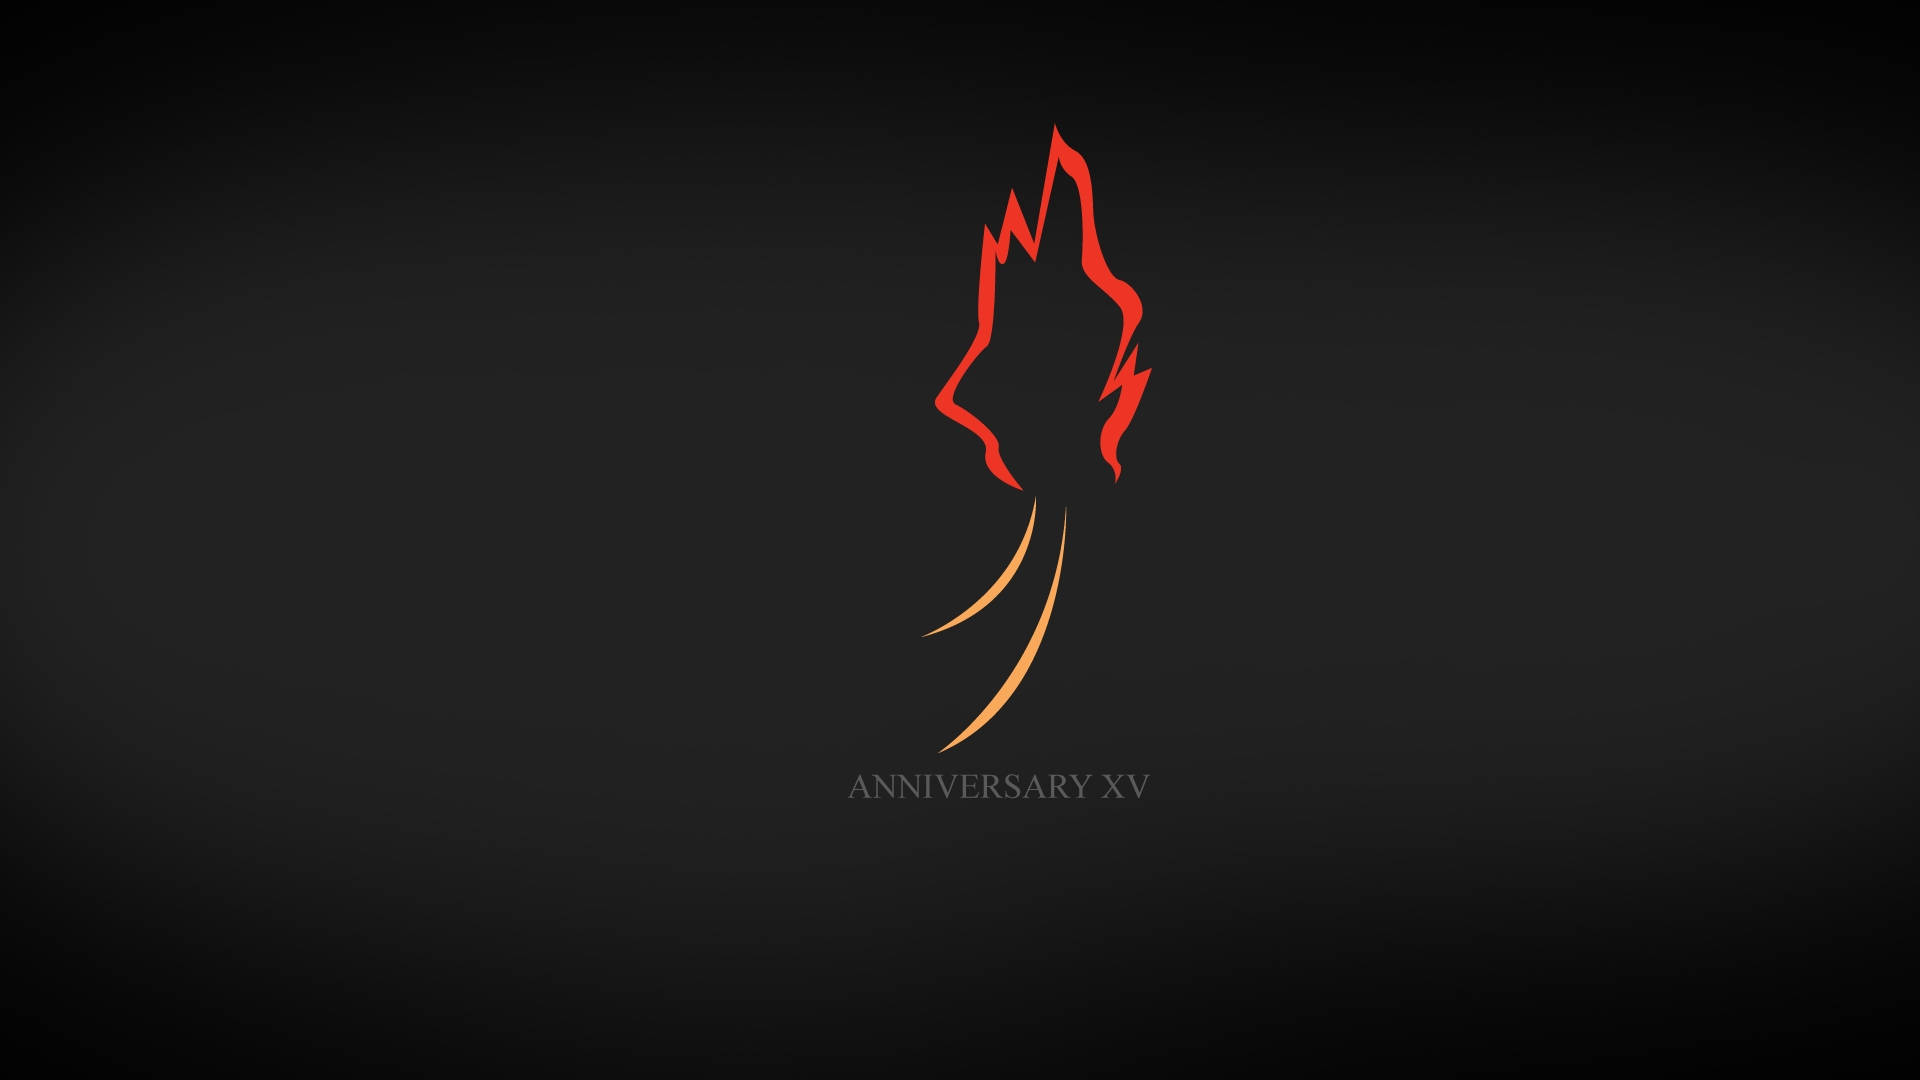 The Flame Of Friendship Burning Bright! #charmander #pokemon #firebreathing